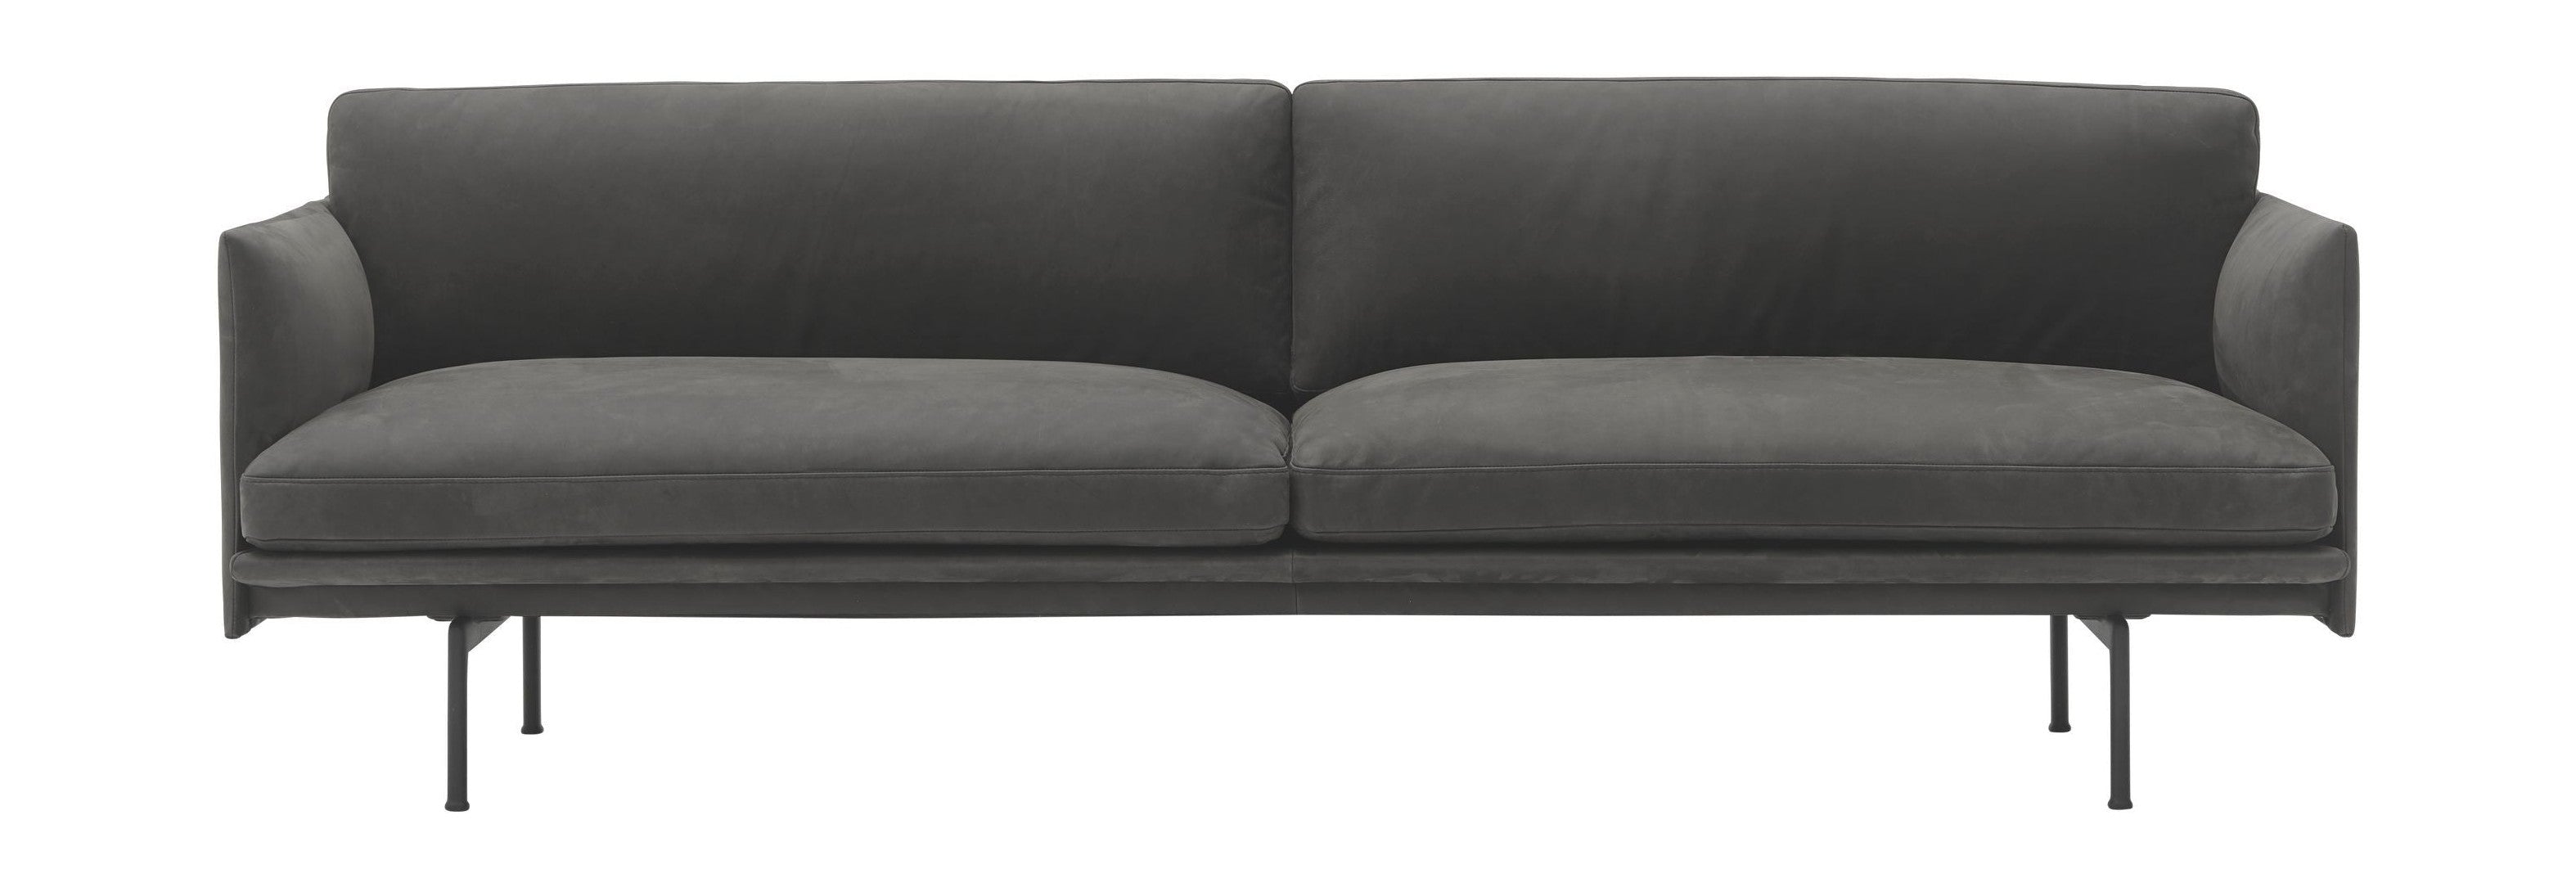 Outline Outline Sofa 3 Seater Grace Leather, Grey/Black